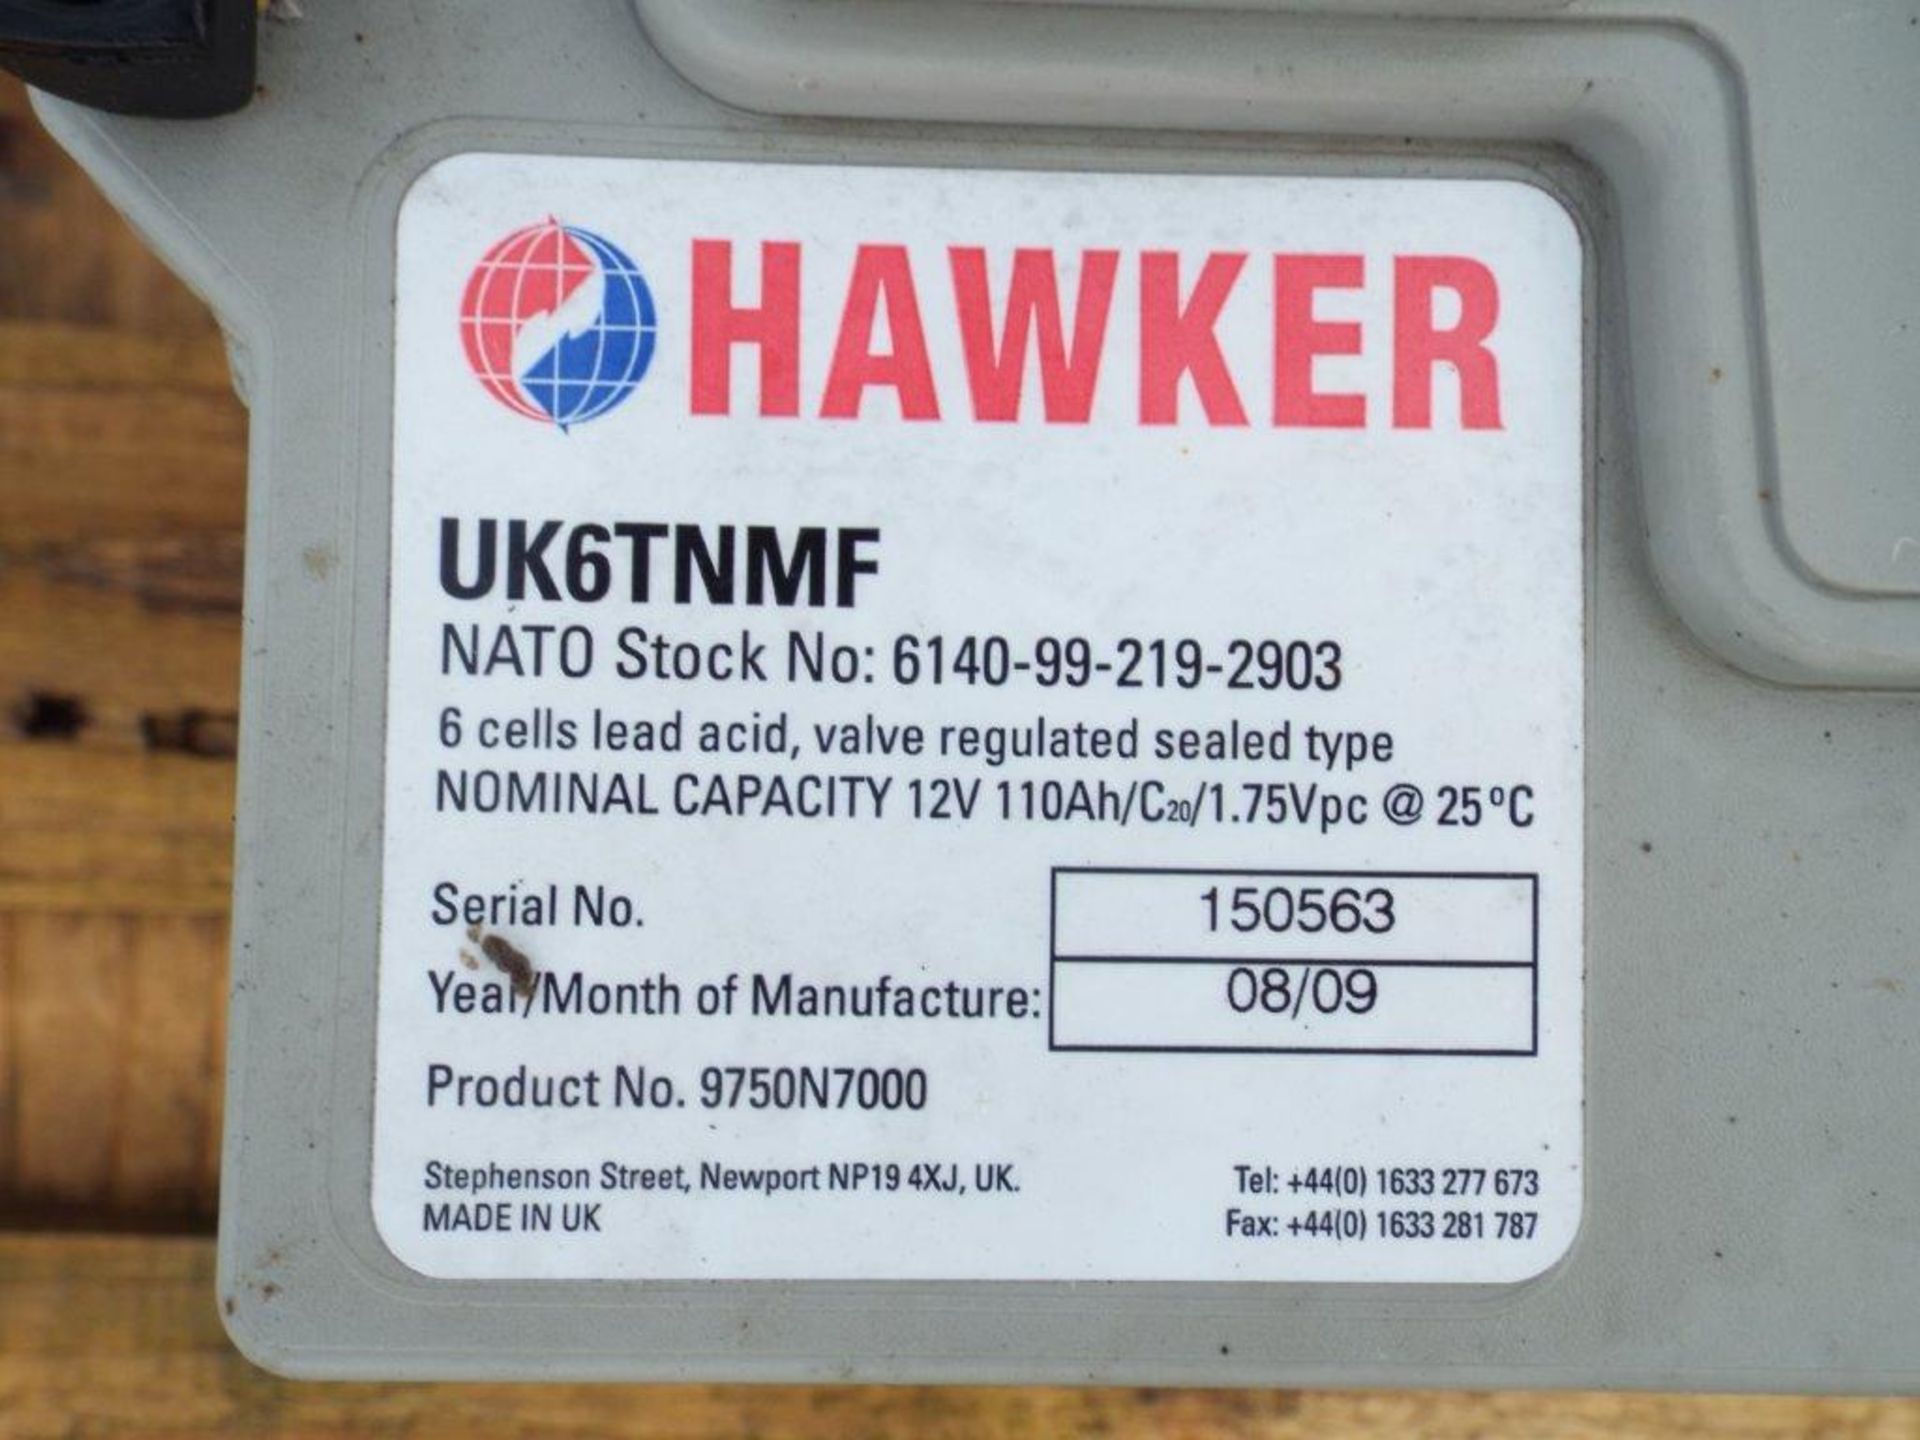 6 x Hawker UK6TNMF Batteries - Image 5 of 6